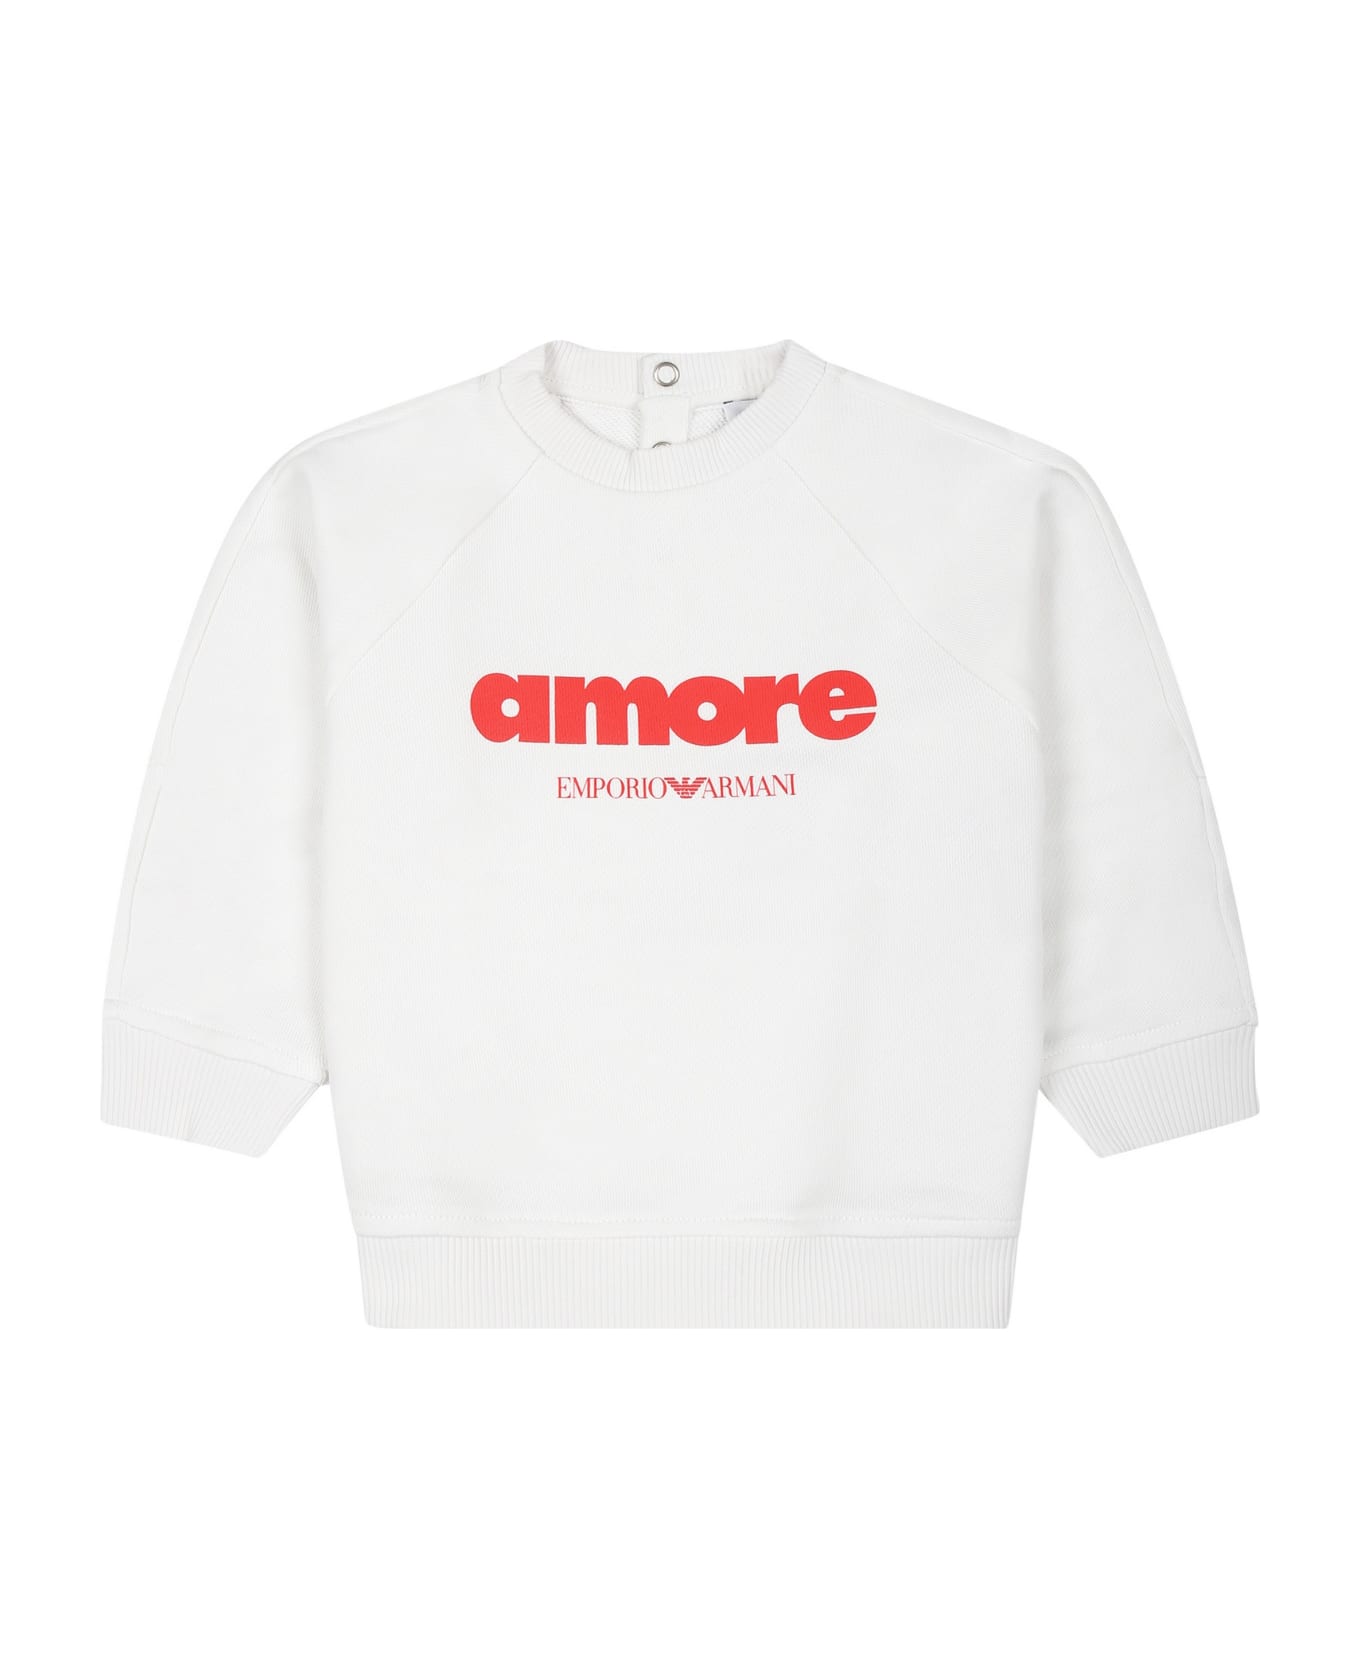 Emporio Armani Ivory Sweatshirt For Babykids With Love Writing - Ivory